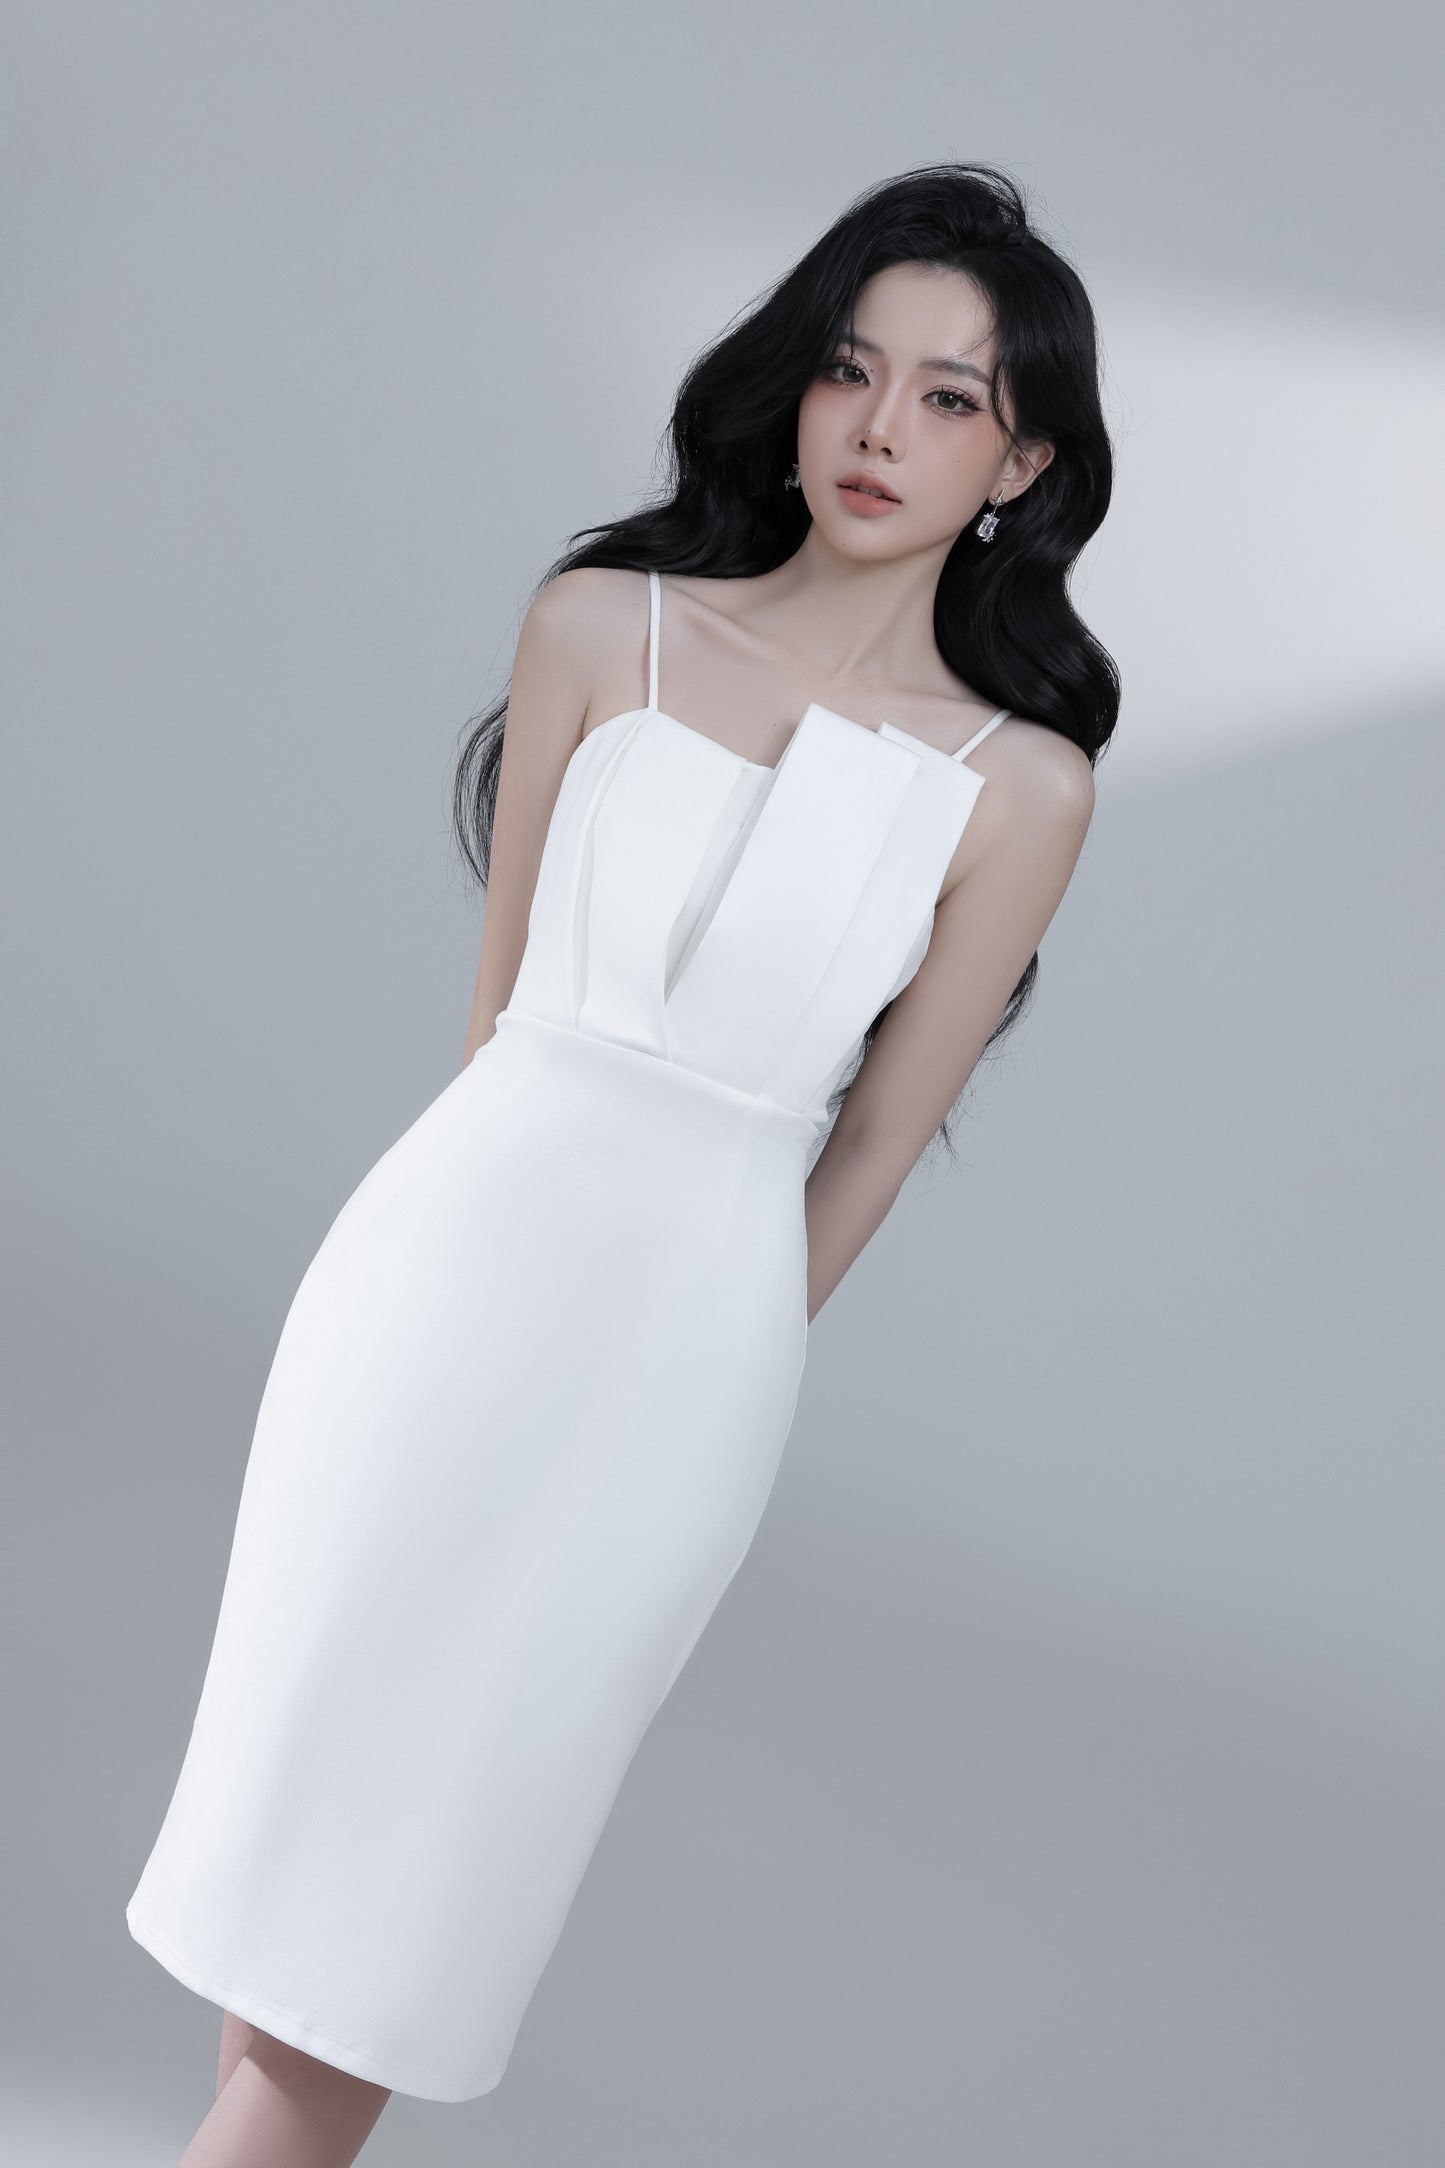 Irabelle Overlay Bodycon Dress in White